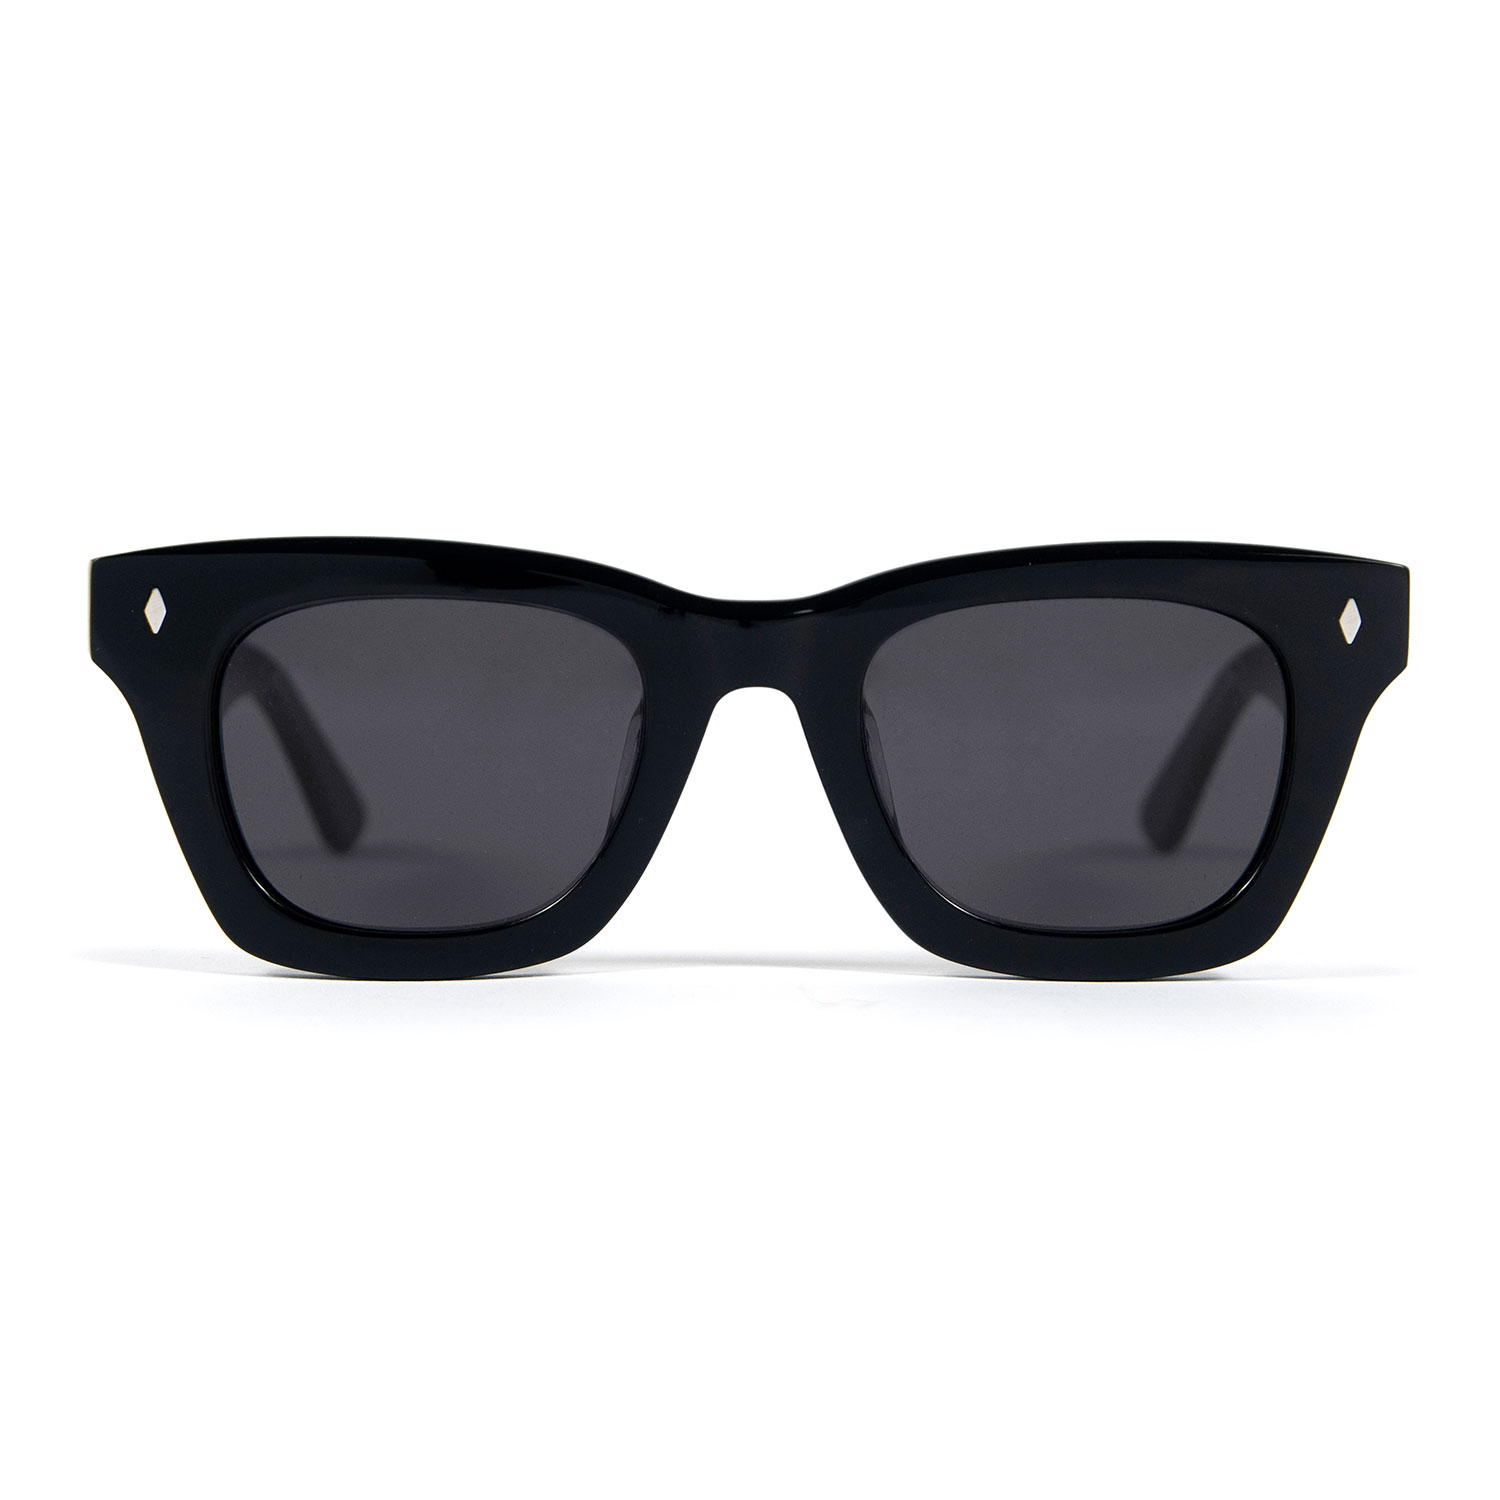 Hell Black - Sunglasses Straight Apparel To | Falcon